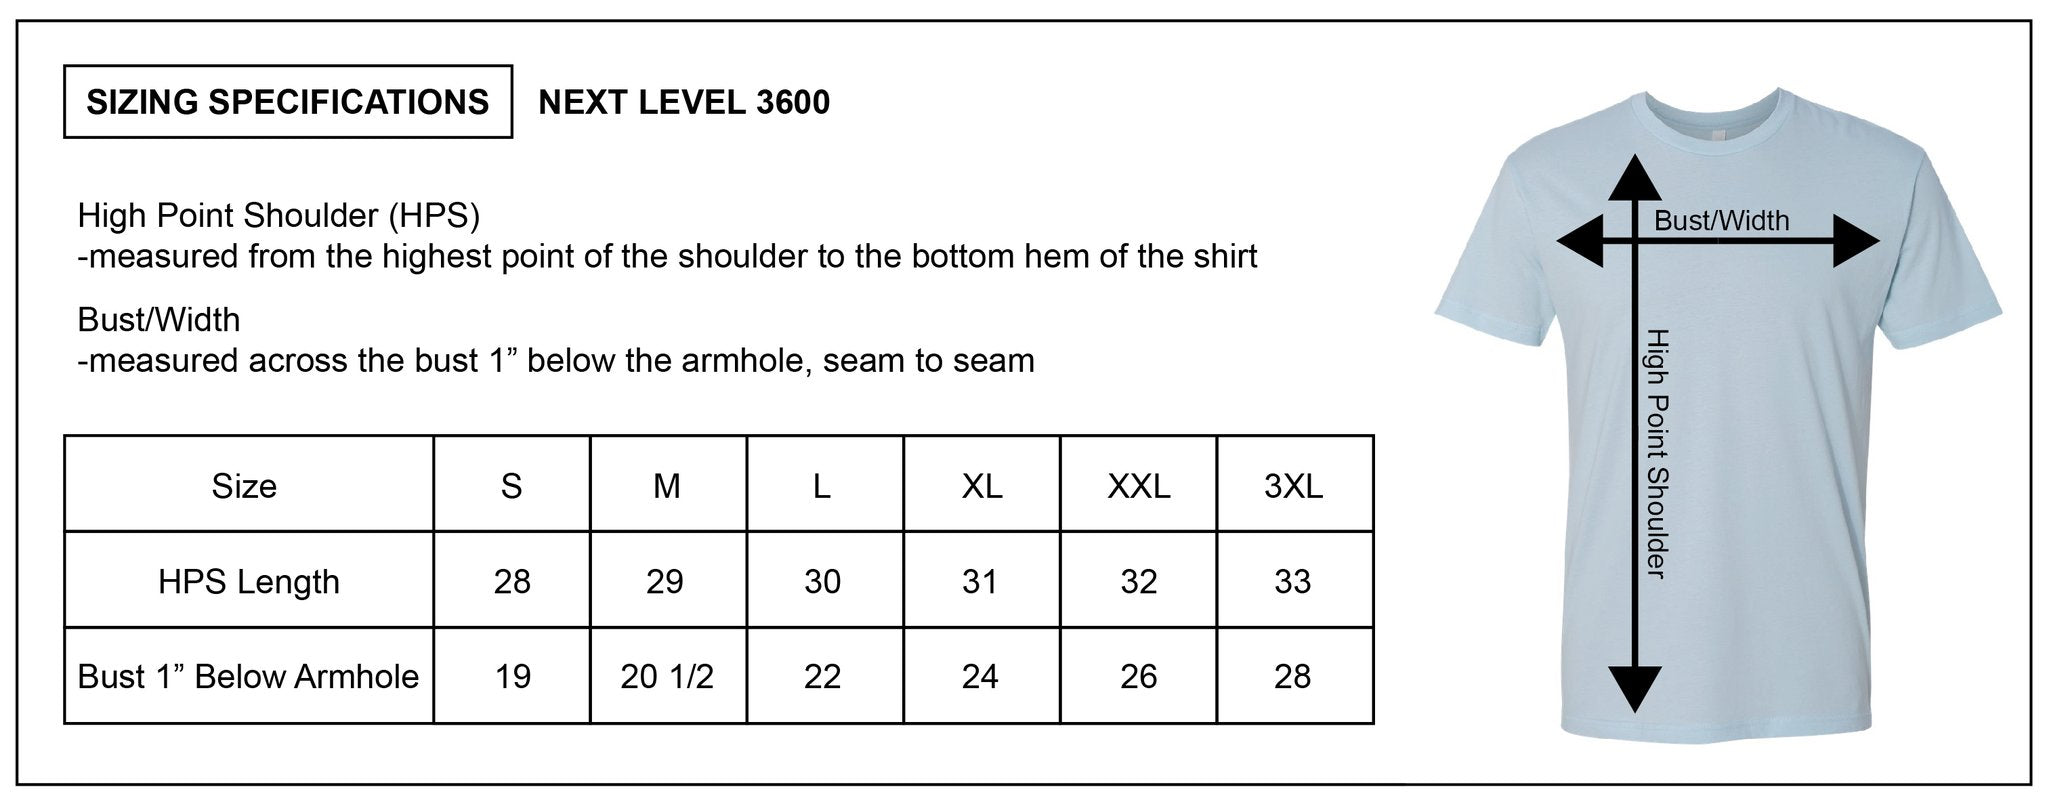 1-800-WLTZSK8 T-Shirt